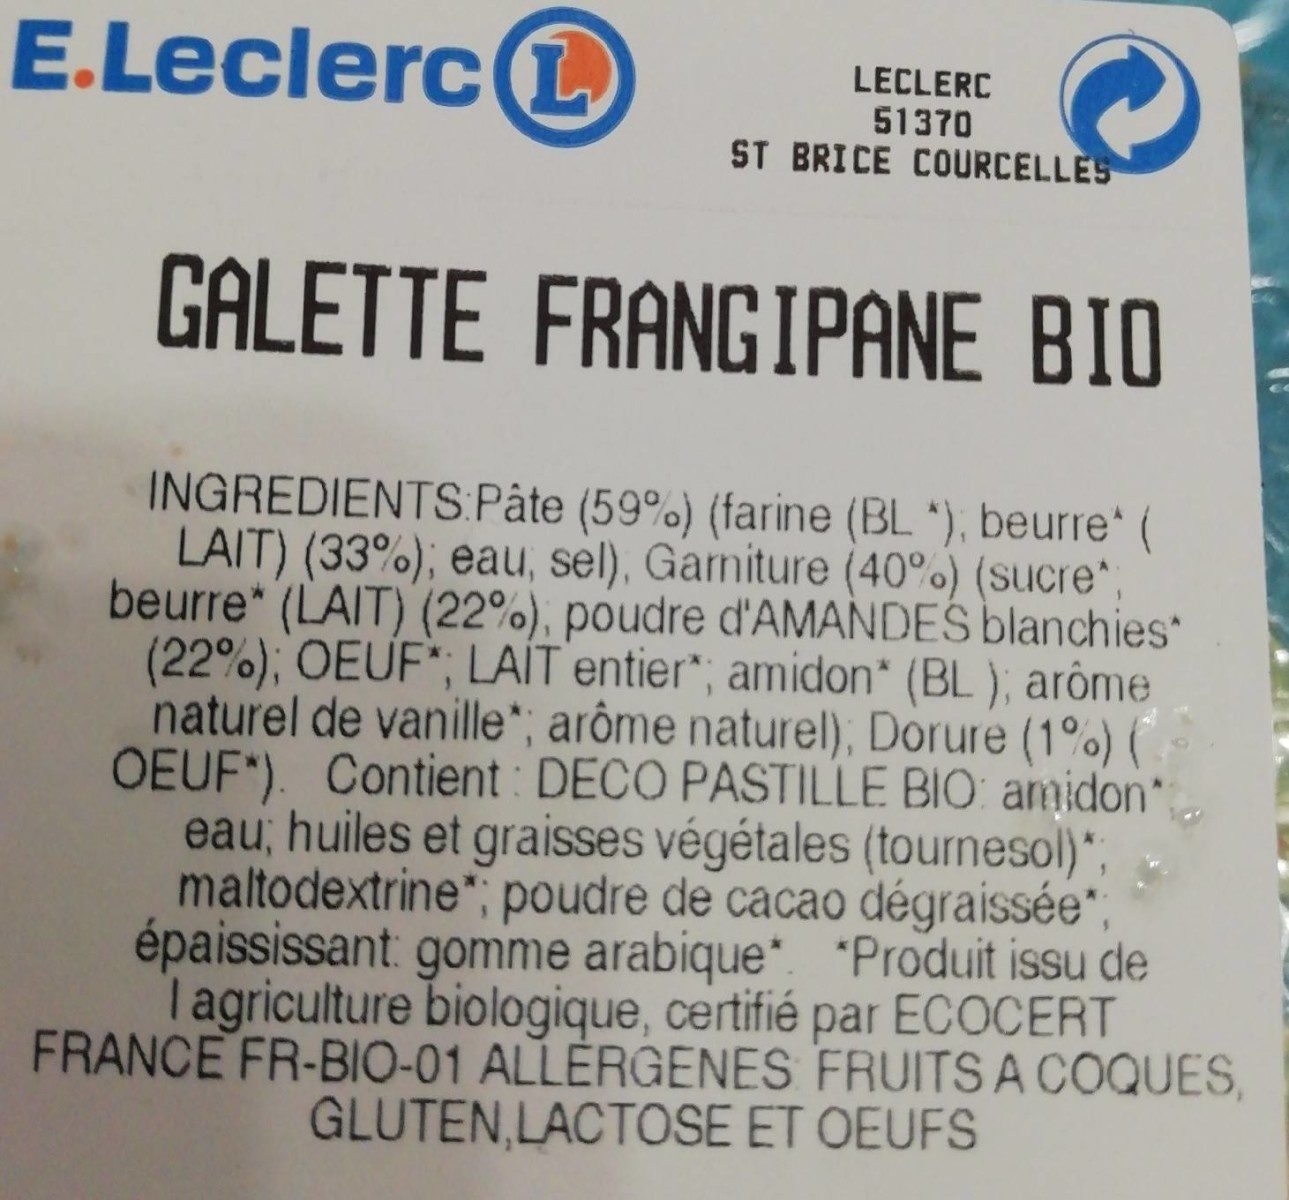 Galette frangipane bio - Ingredients - fr